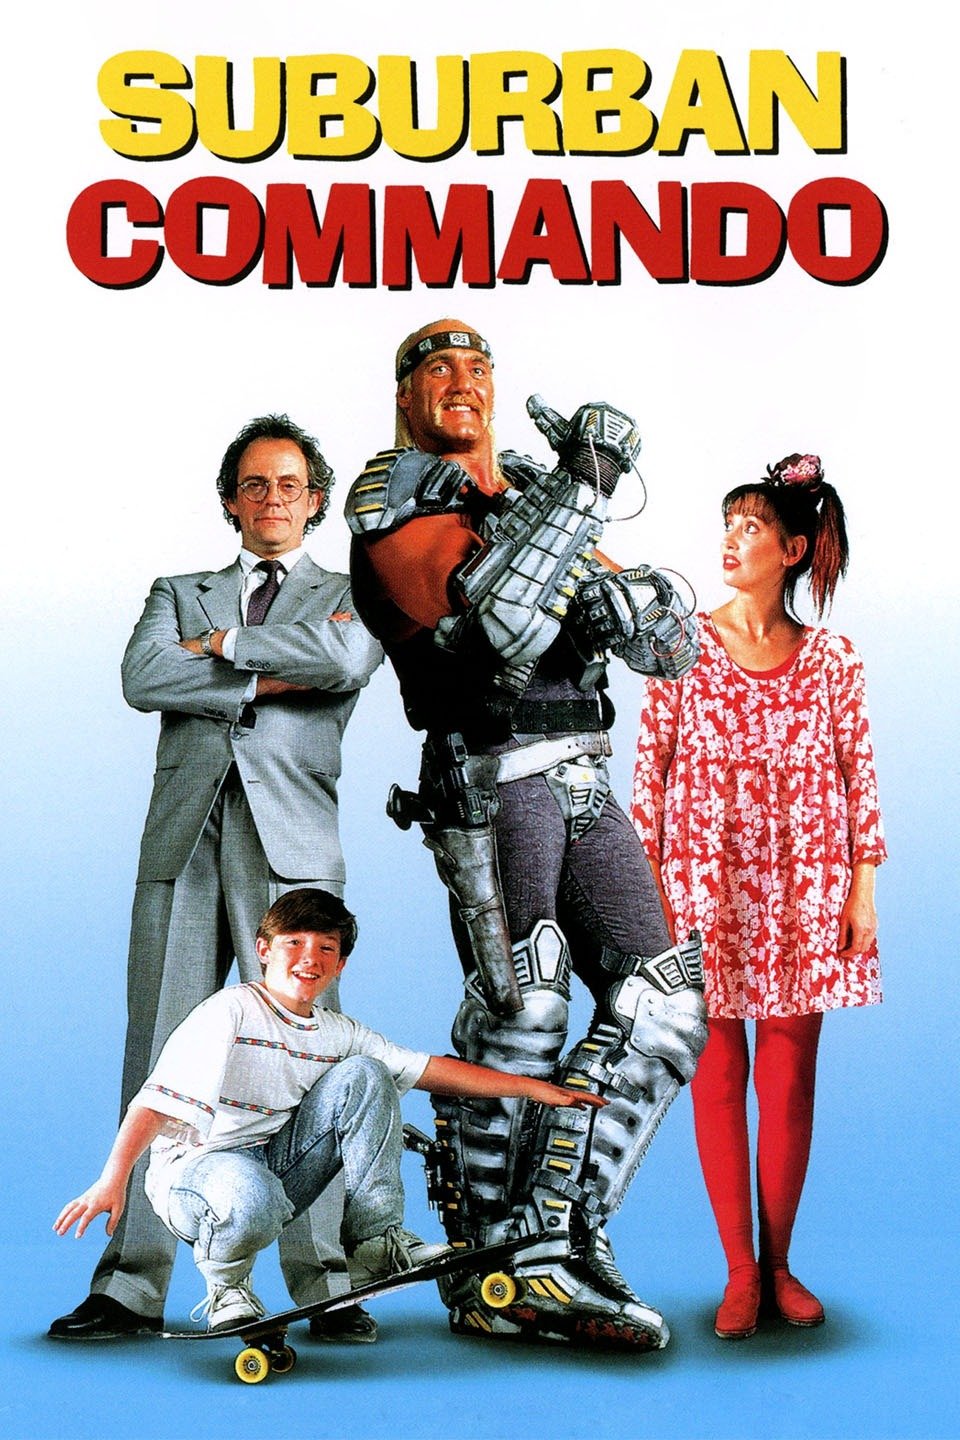 commando 2 movie review imdb